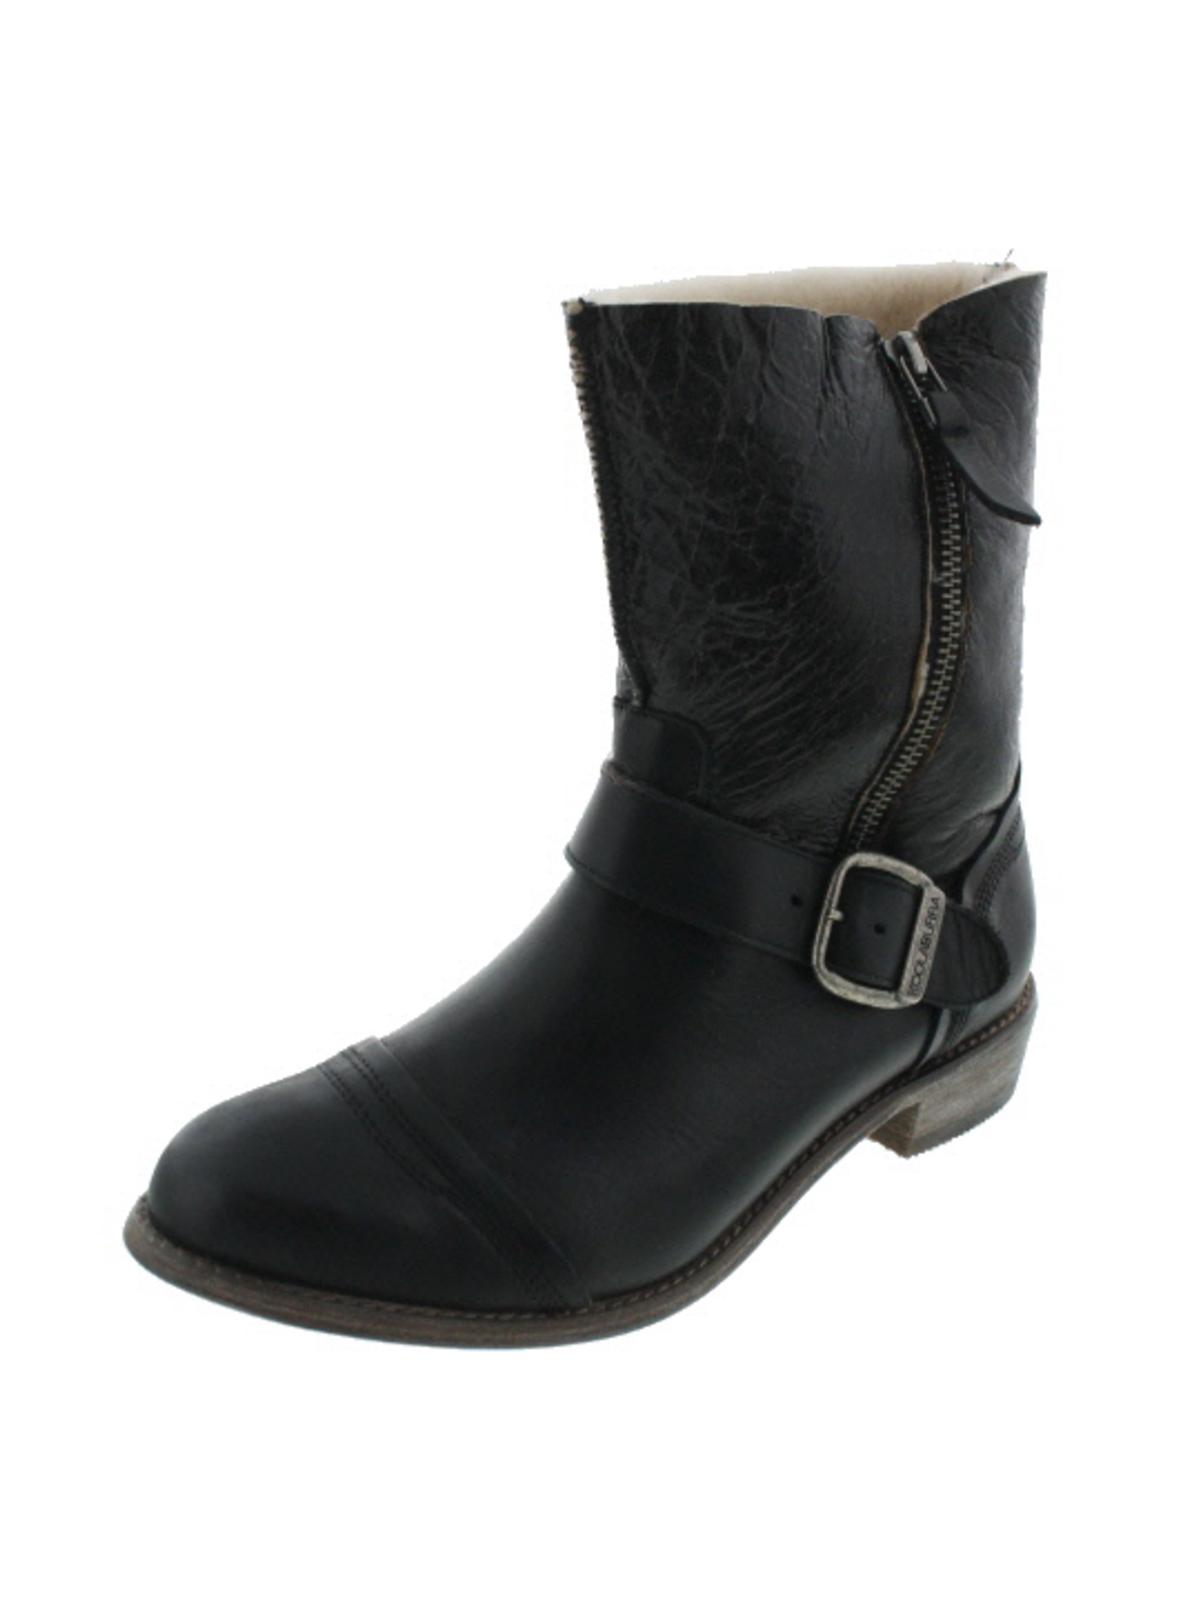 Koolaburra Duarte Womens Leather/Suede Faux Shearling Mid-Calf Boots US 5 female